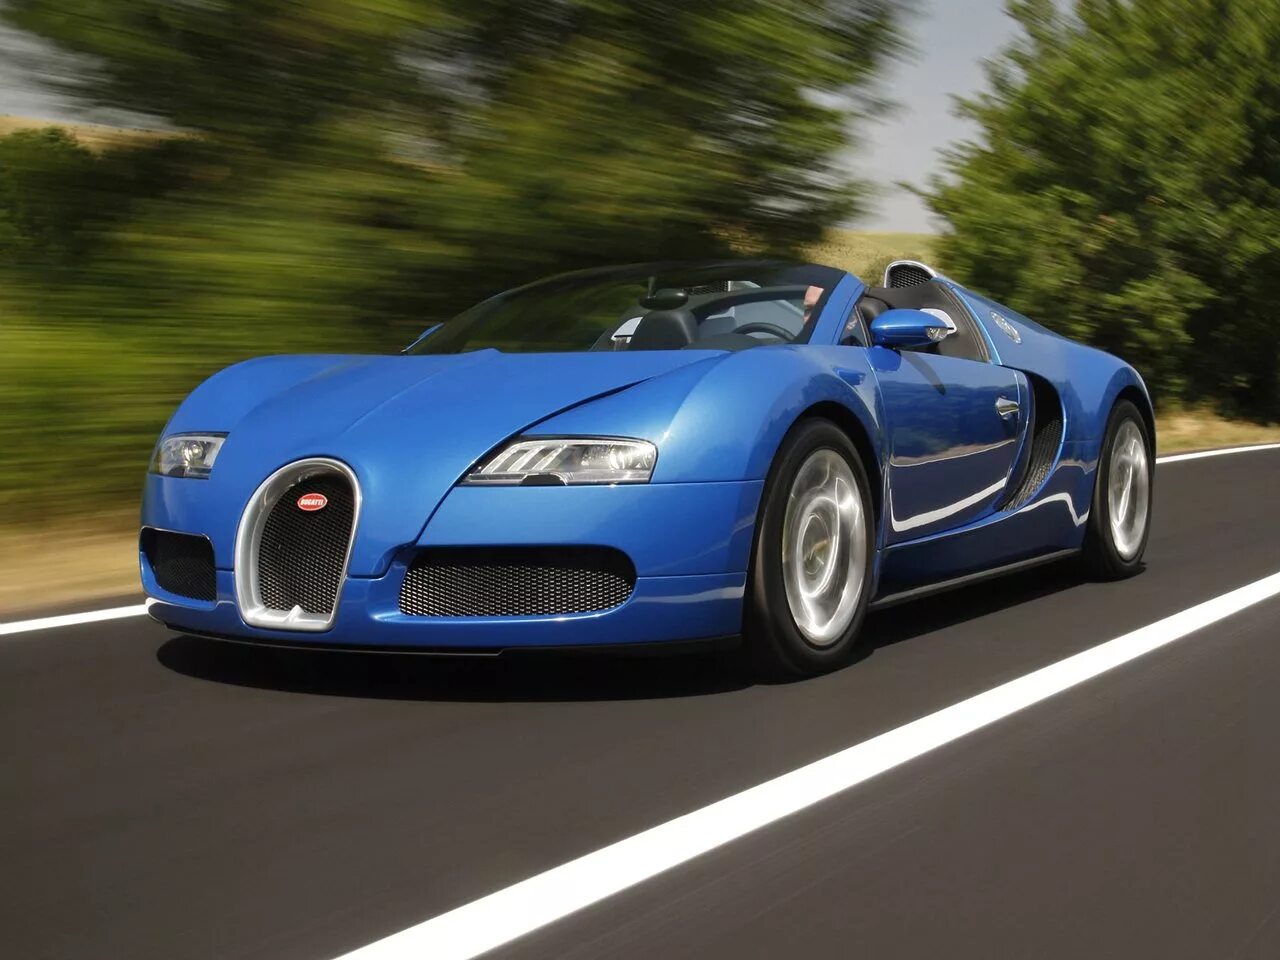 Bugatti 12. Bugatti Veyron 16.4 Grand Sport. Бугатти Вейрон 2003. 2008 Bugatti Veyron 16.4 Grand Sport. Bugatti Veyron Grand Sport Roadster.